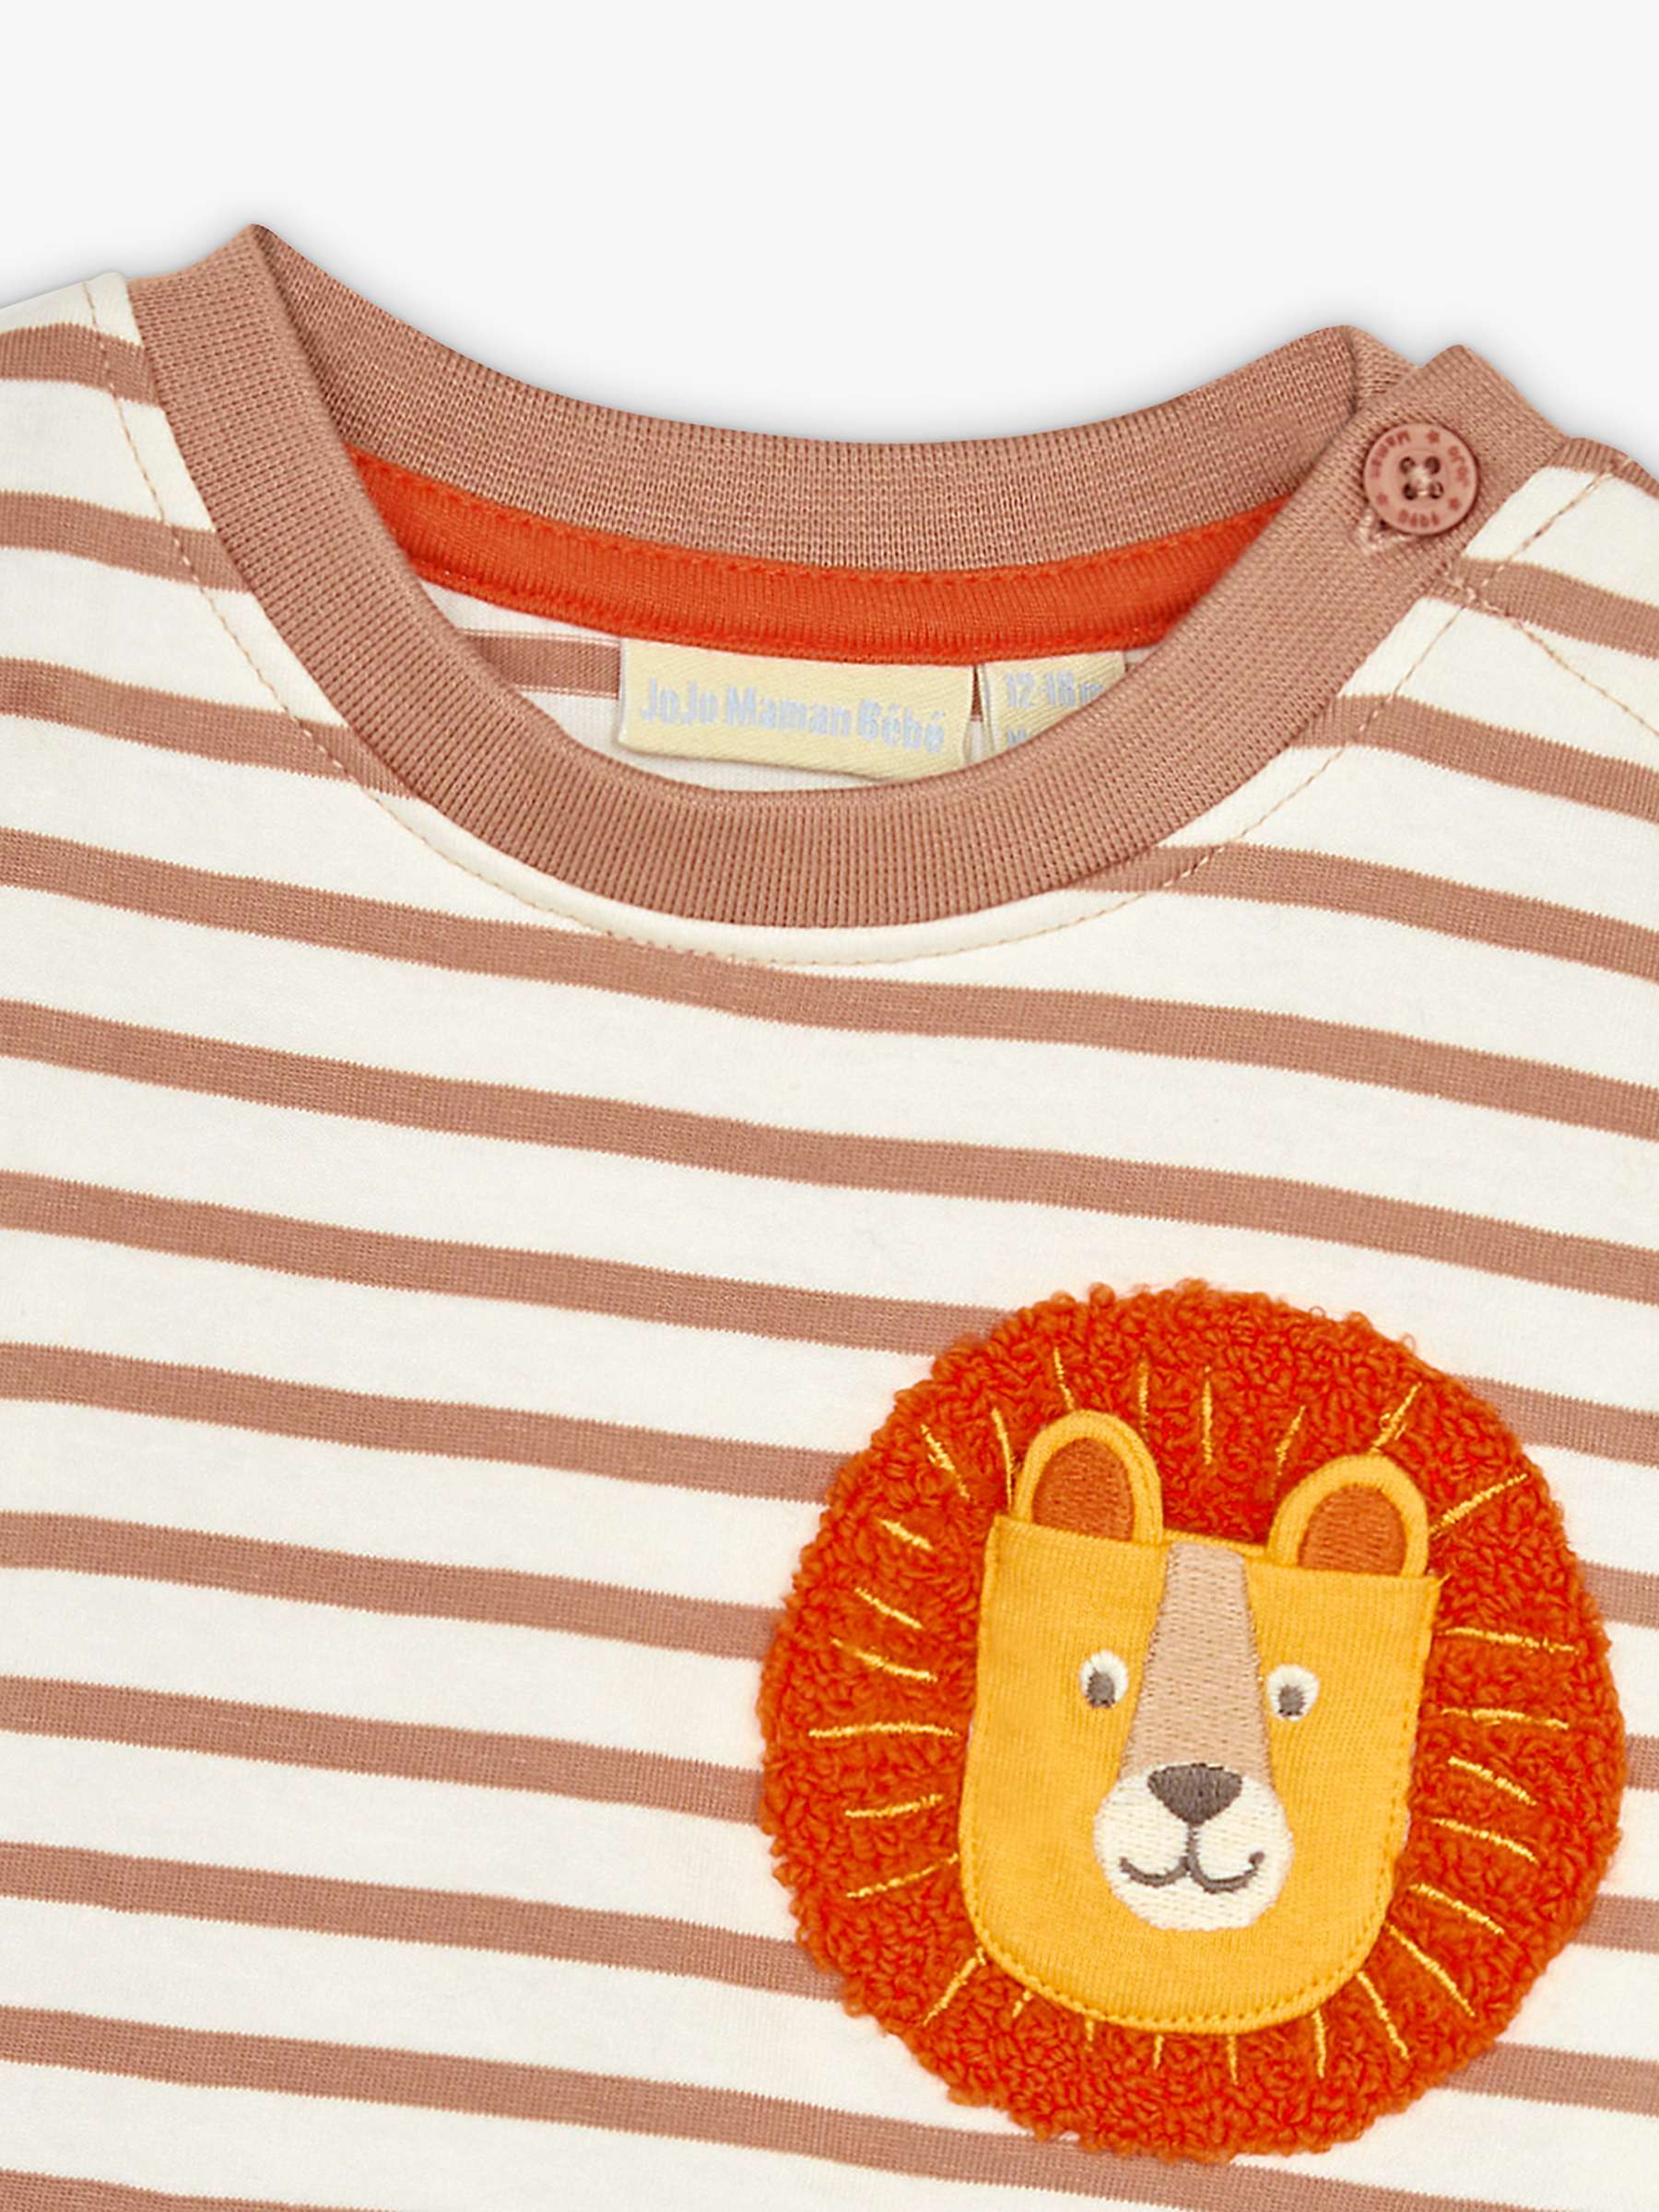 Buy JoJo Maman Bébé Baby Lion Pocket Stripe Top, Ecru/Multi Online at johnlewis.com